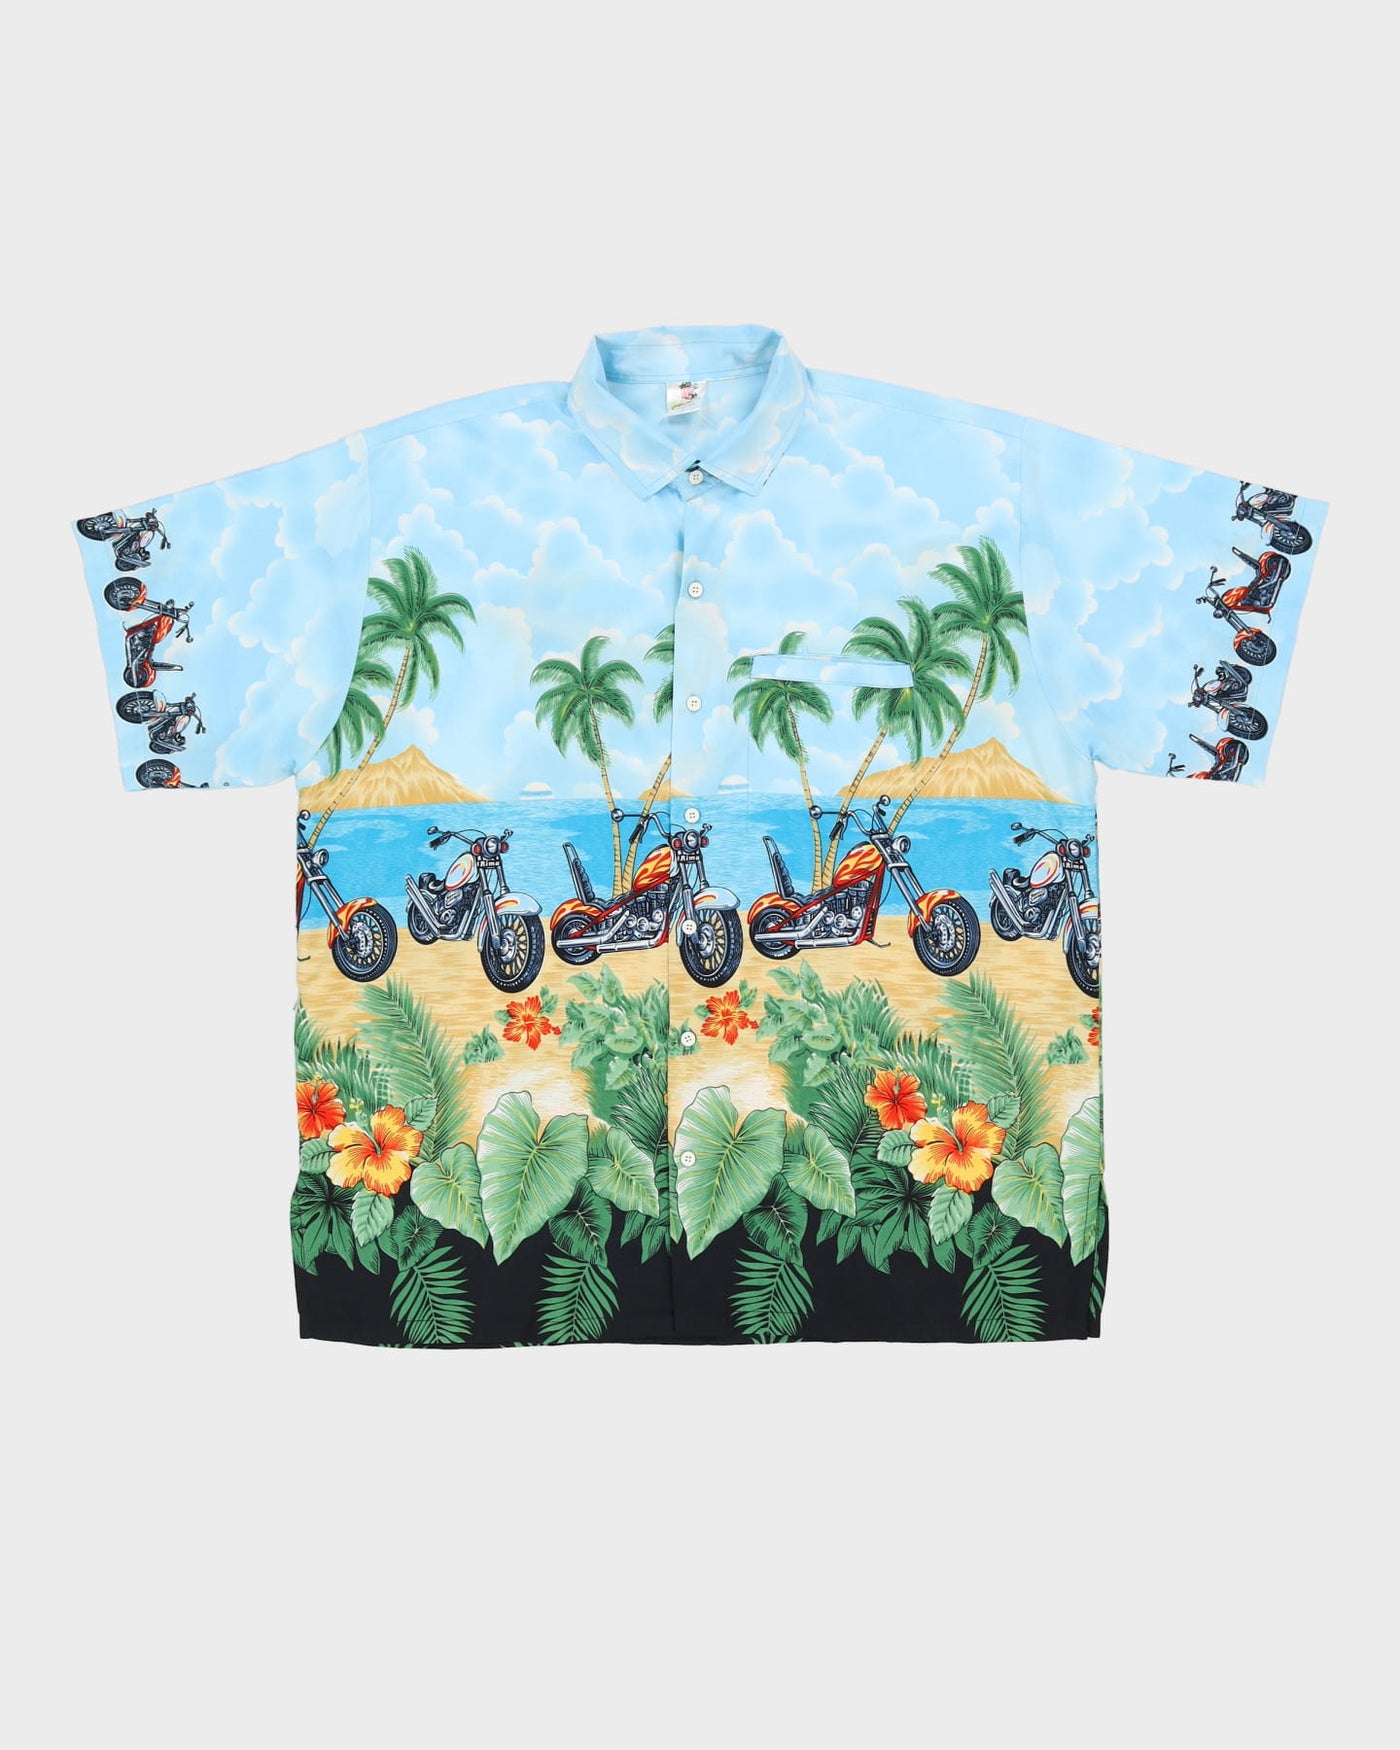 Motorcycle Patterned Hawaiian Style Shirt - XXL